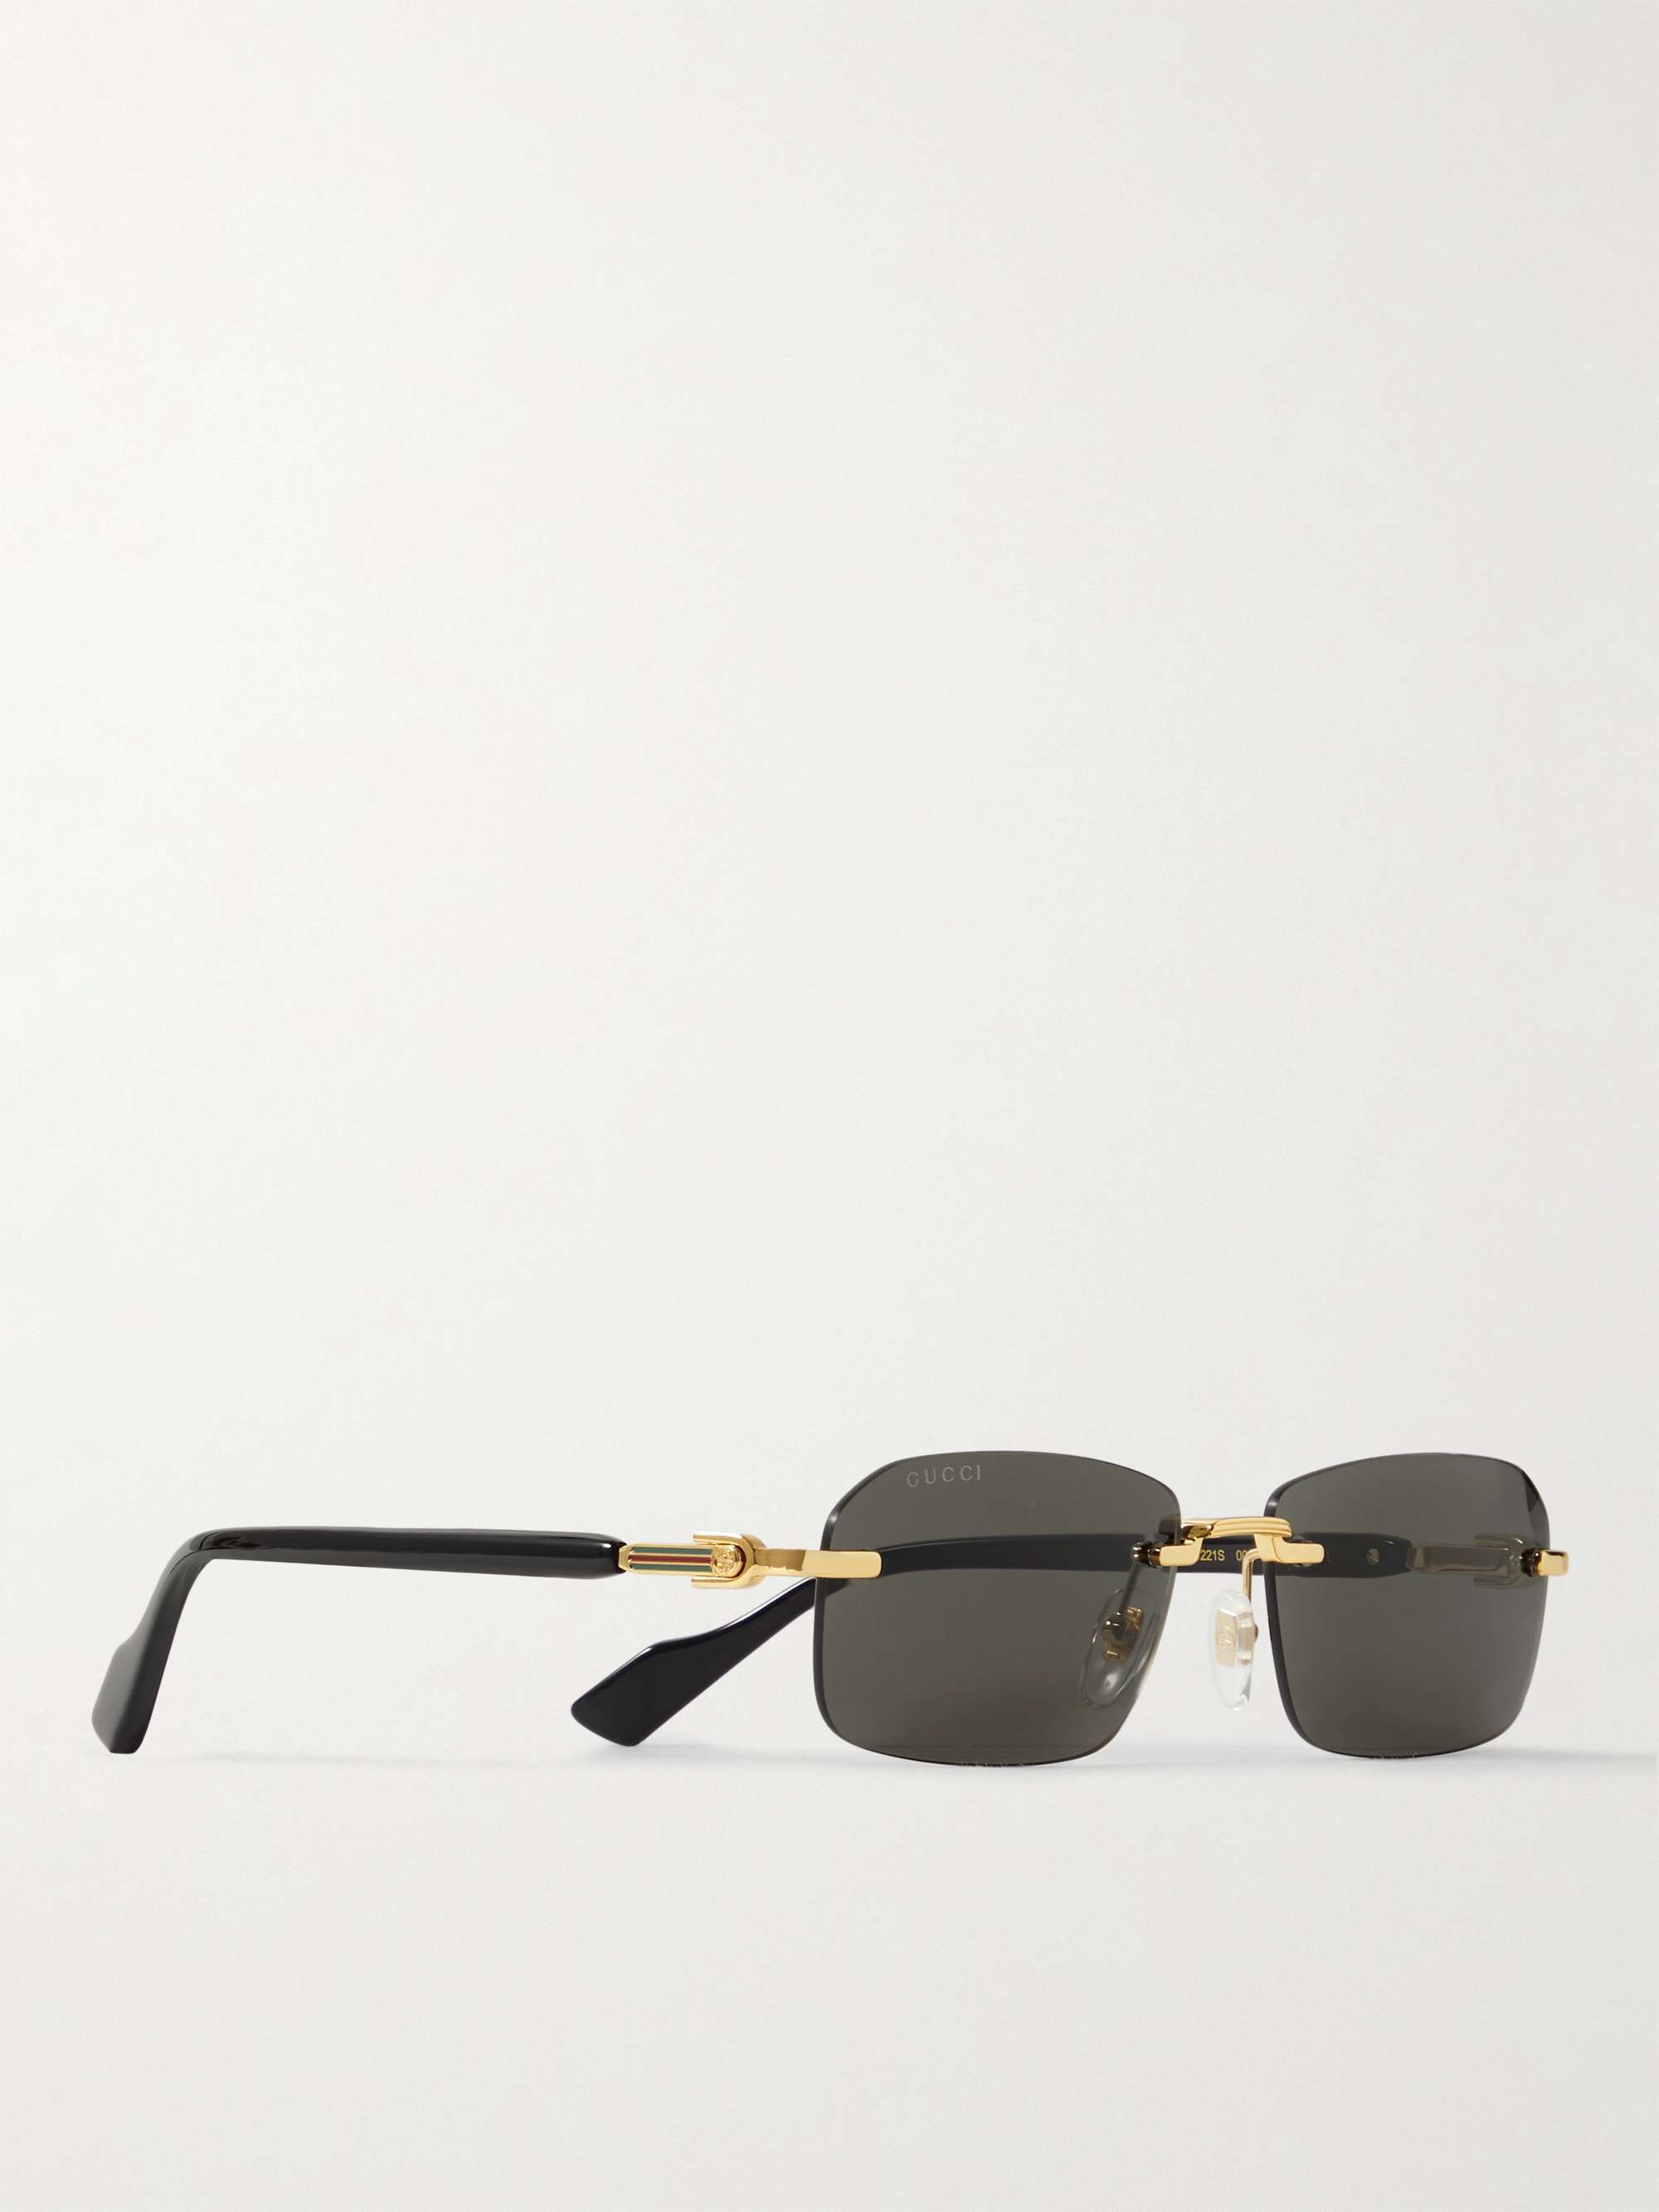 GUCCI EYEWEAR Rimless Rectangular-Frame Gold-Tone and Tortoiseshell Acetate Sunglasses